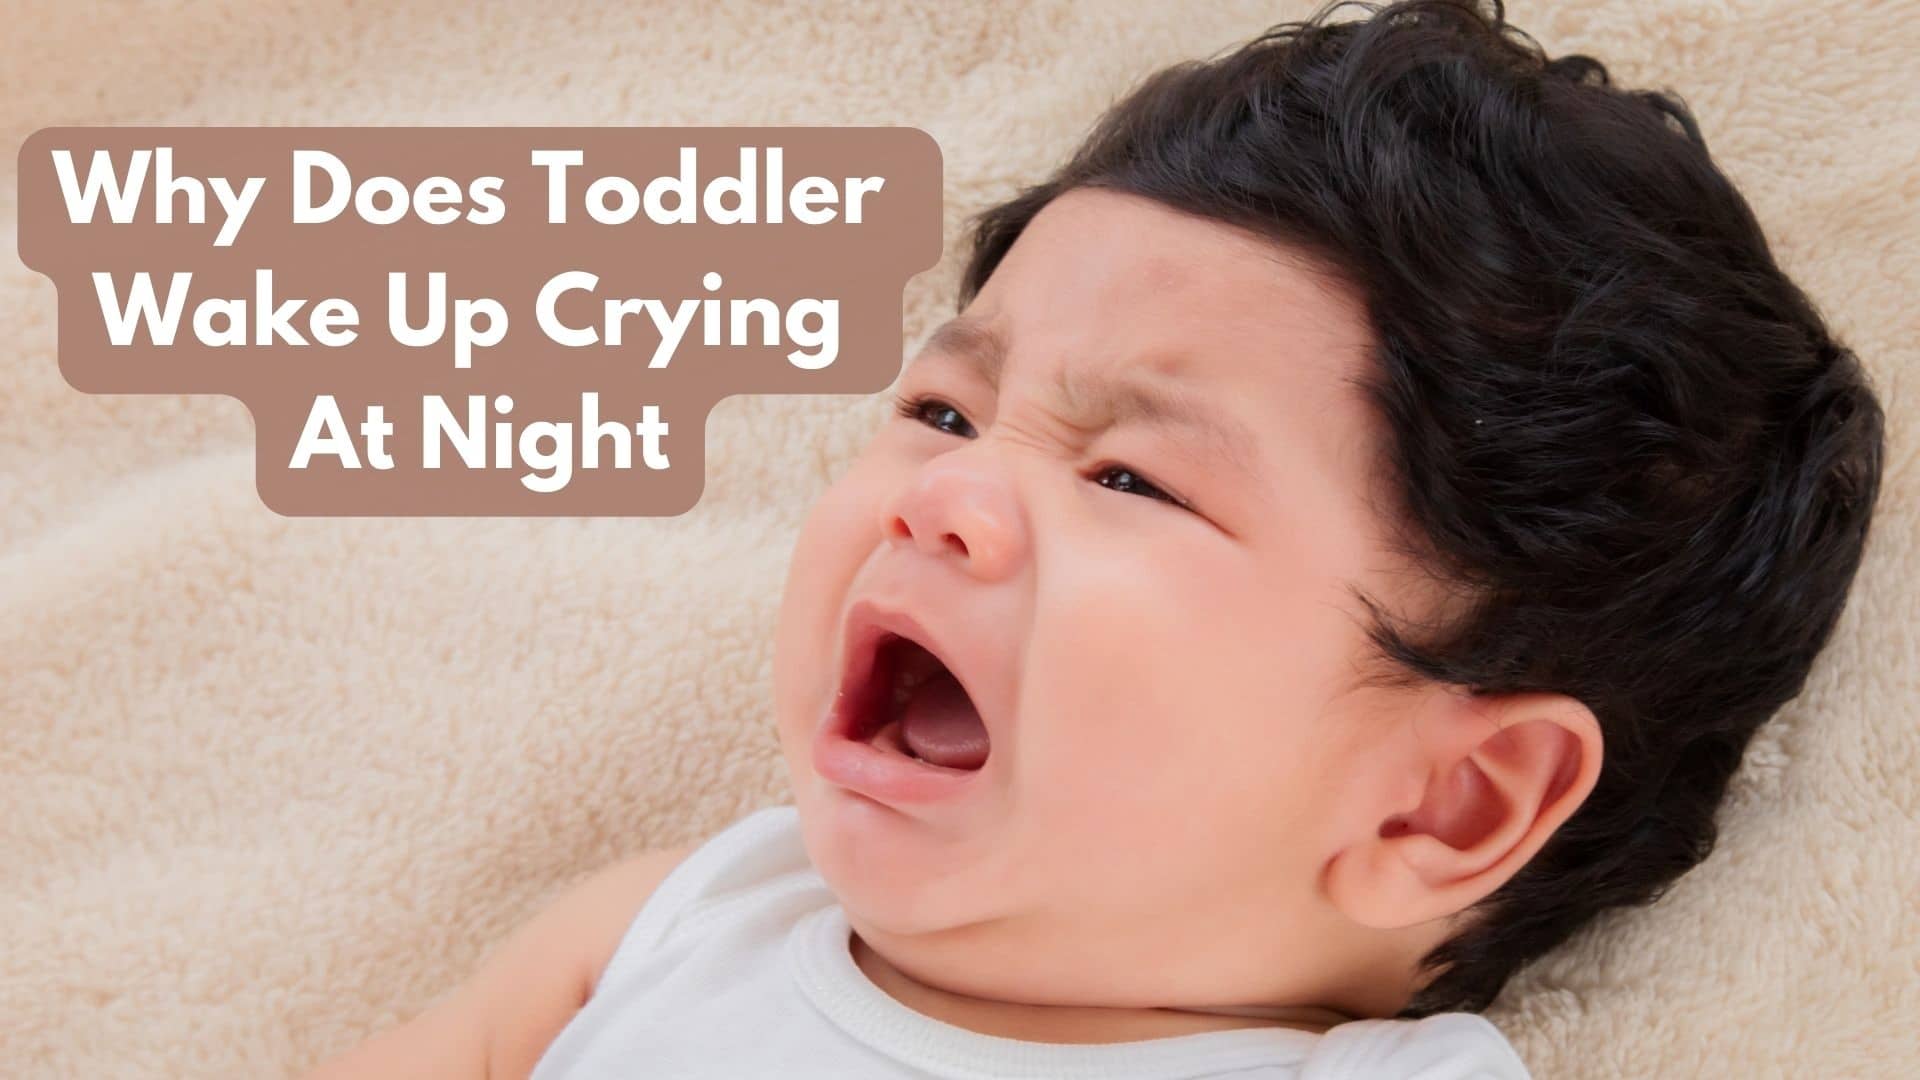 Why Does My Toddler Wake Up Crying At Night?